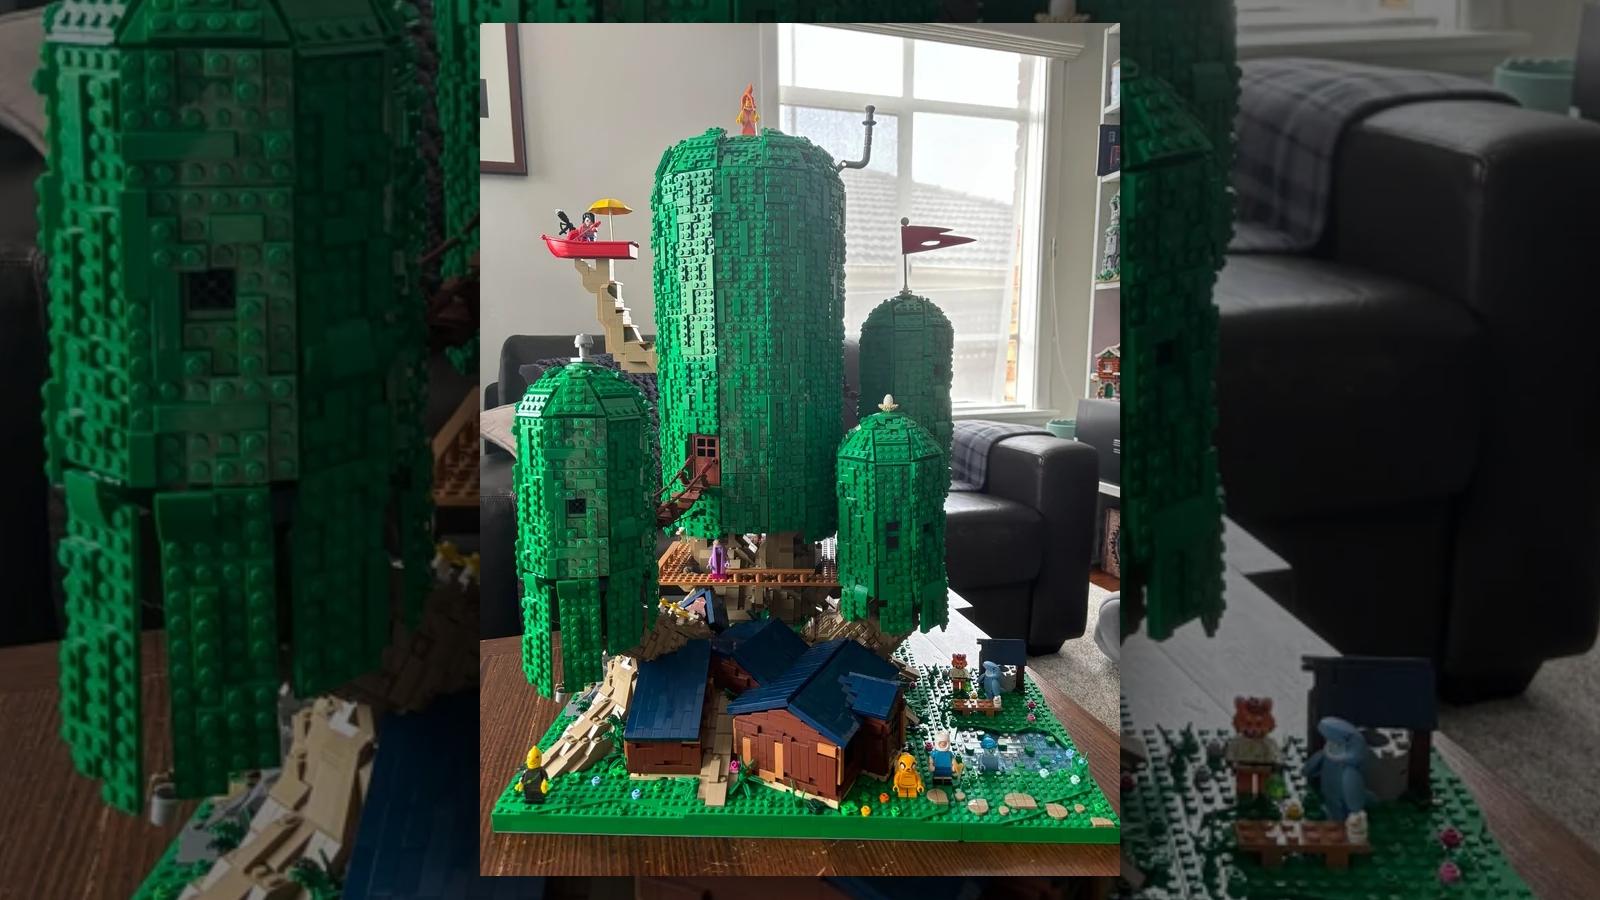 LEGO Adventure time set